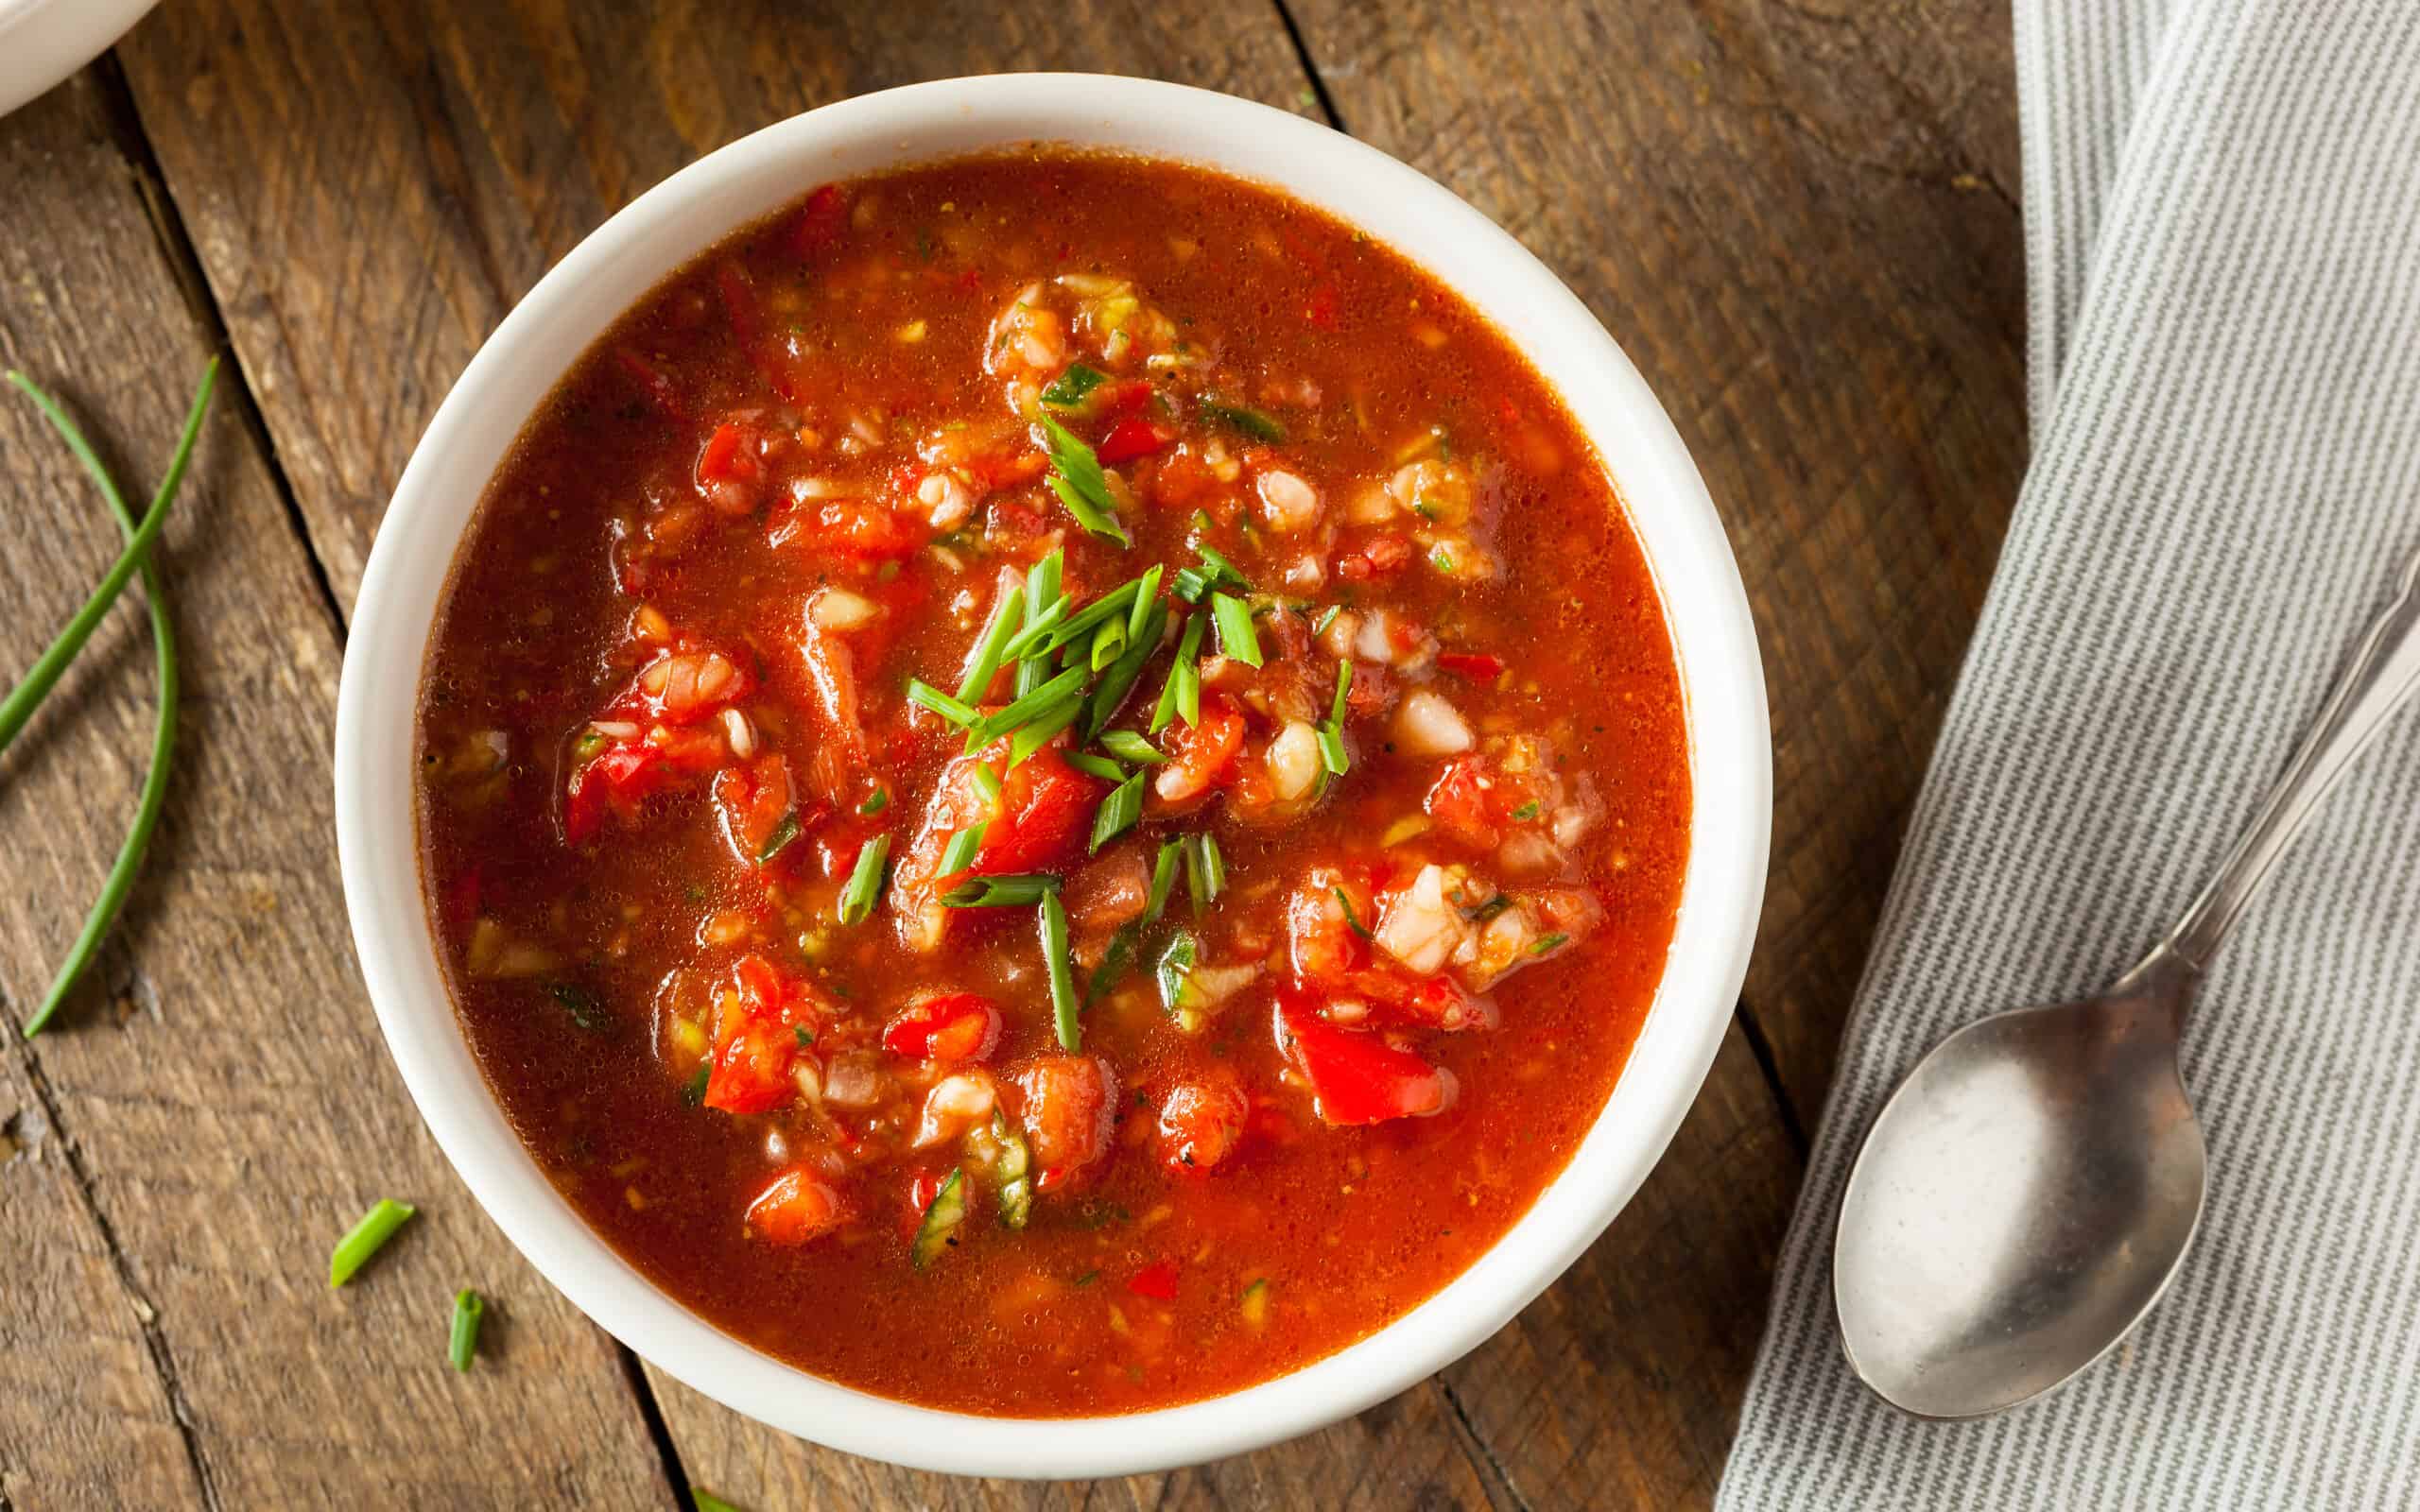 Spicy Homemade Gazpacho Soup